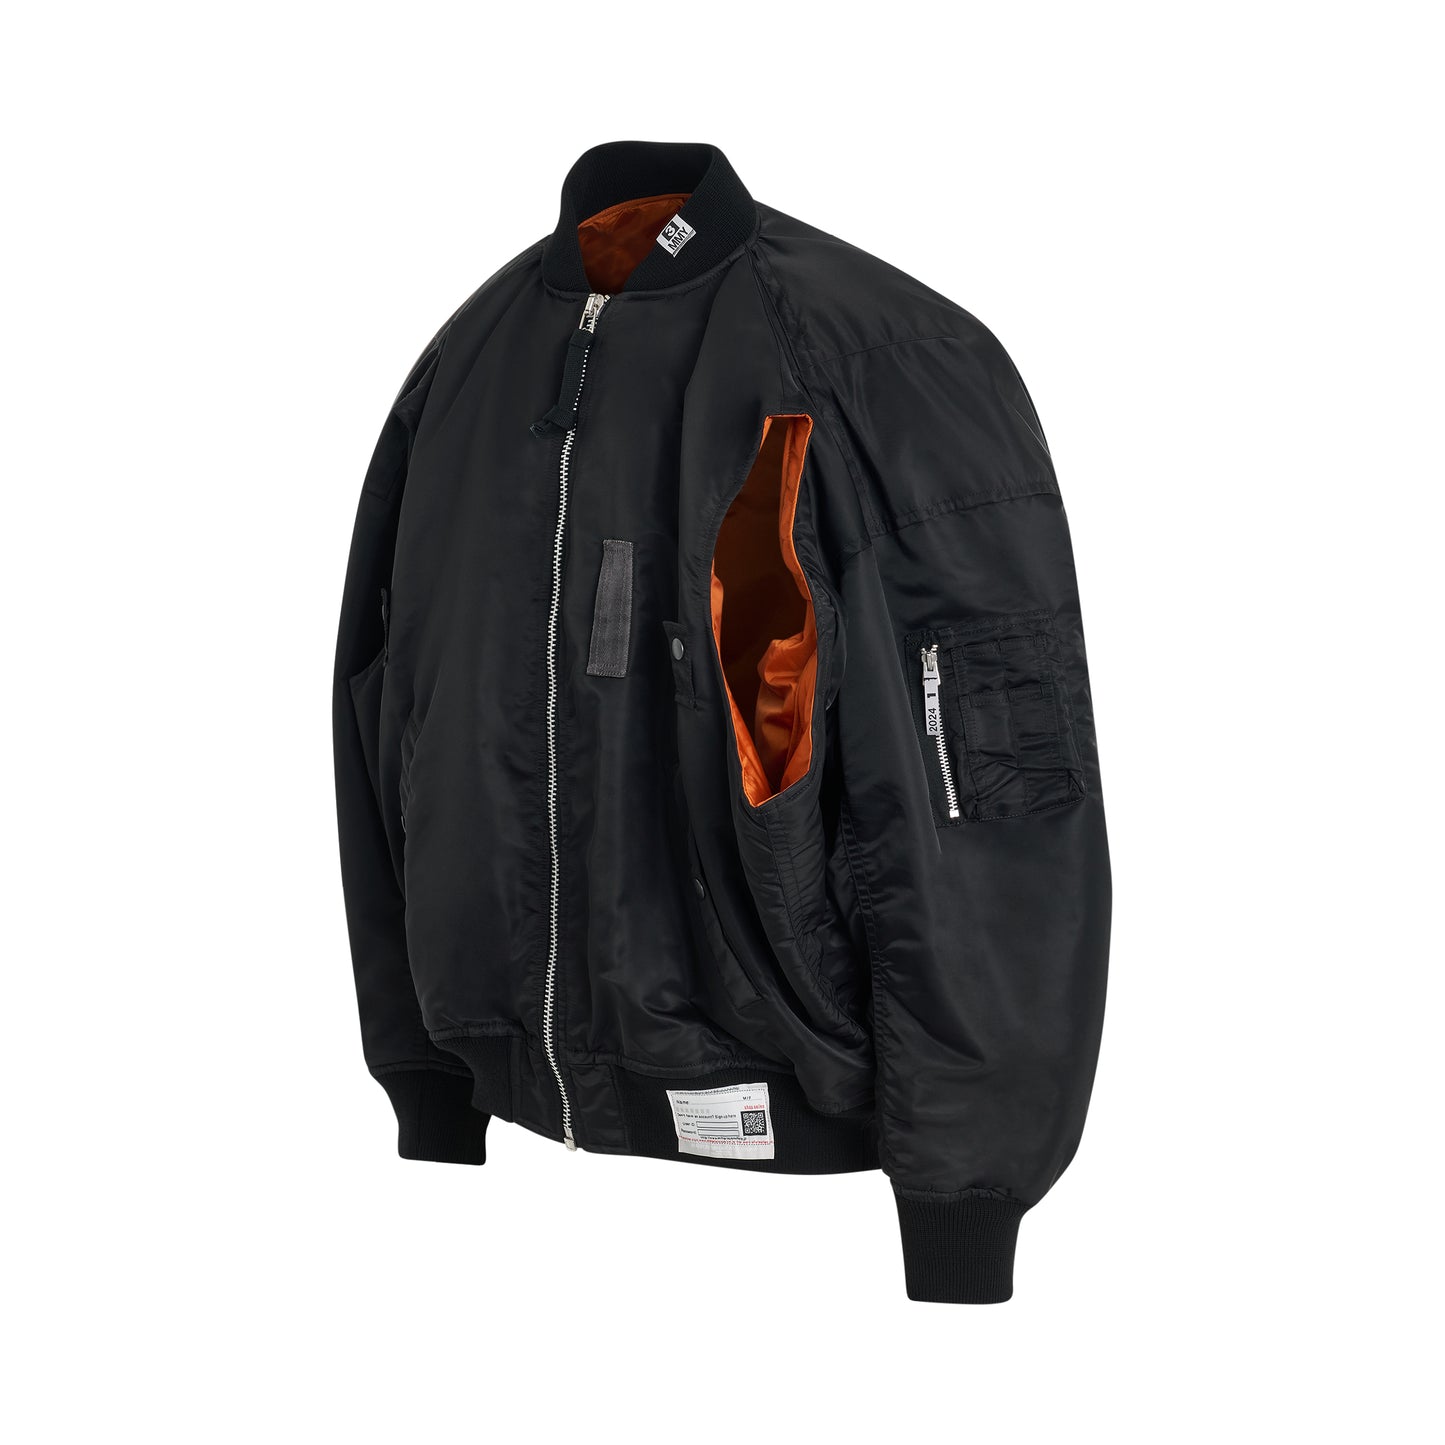 Double Armhole Ma-1 Jacket in Black